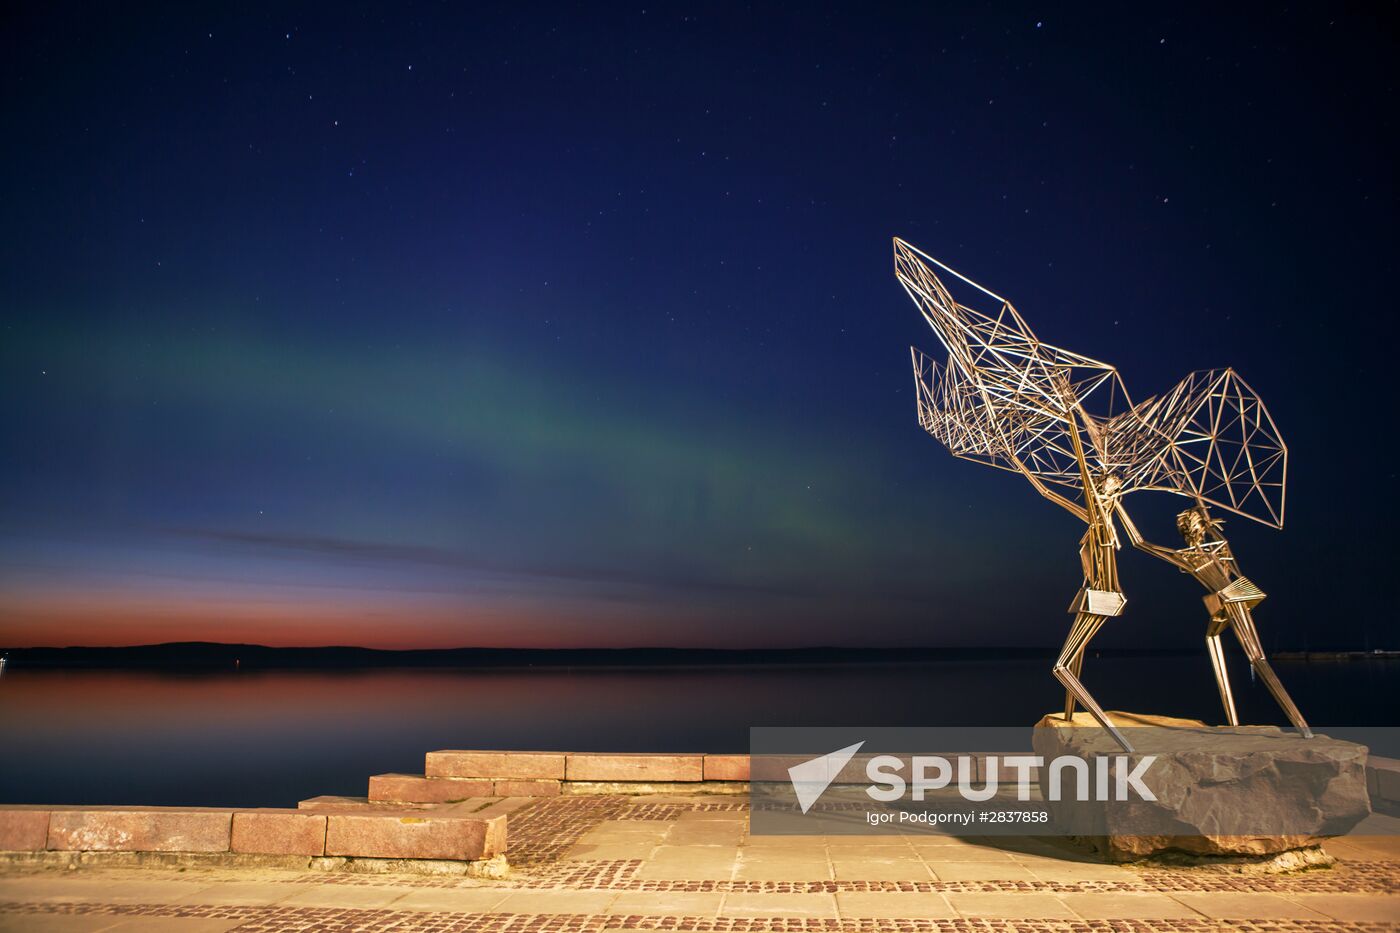 Aurora borealis in Petrozavodsk